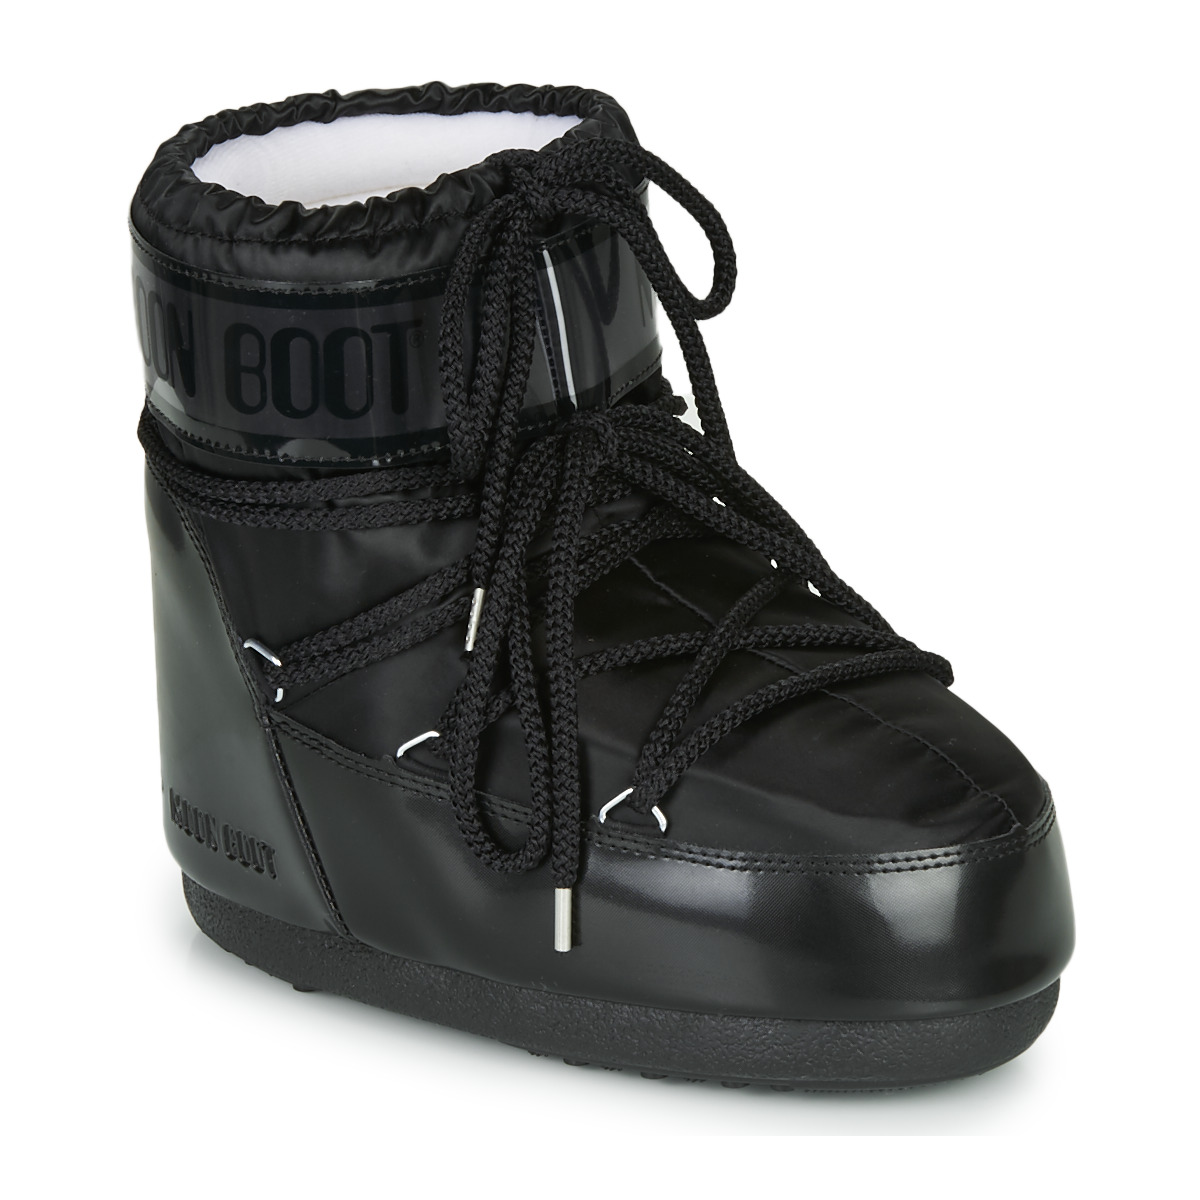 Schuhe Damen Schneestiefel Moon Boot MOON BOOT CLASSIC LOW GLANCE Schwarz